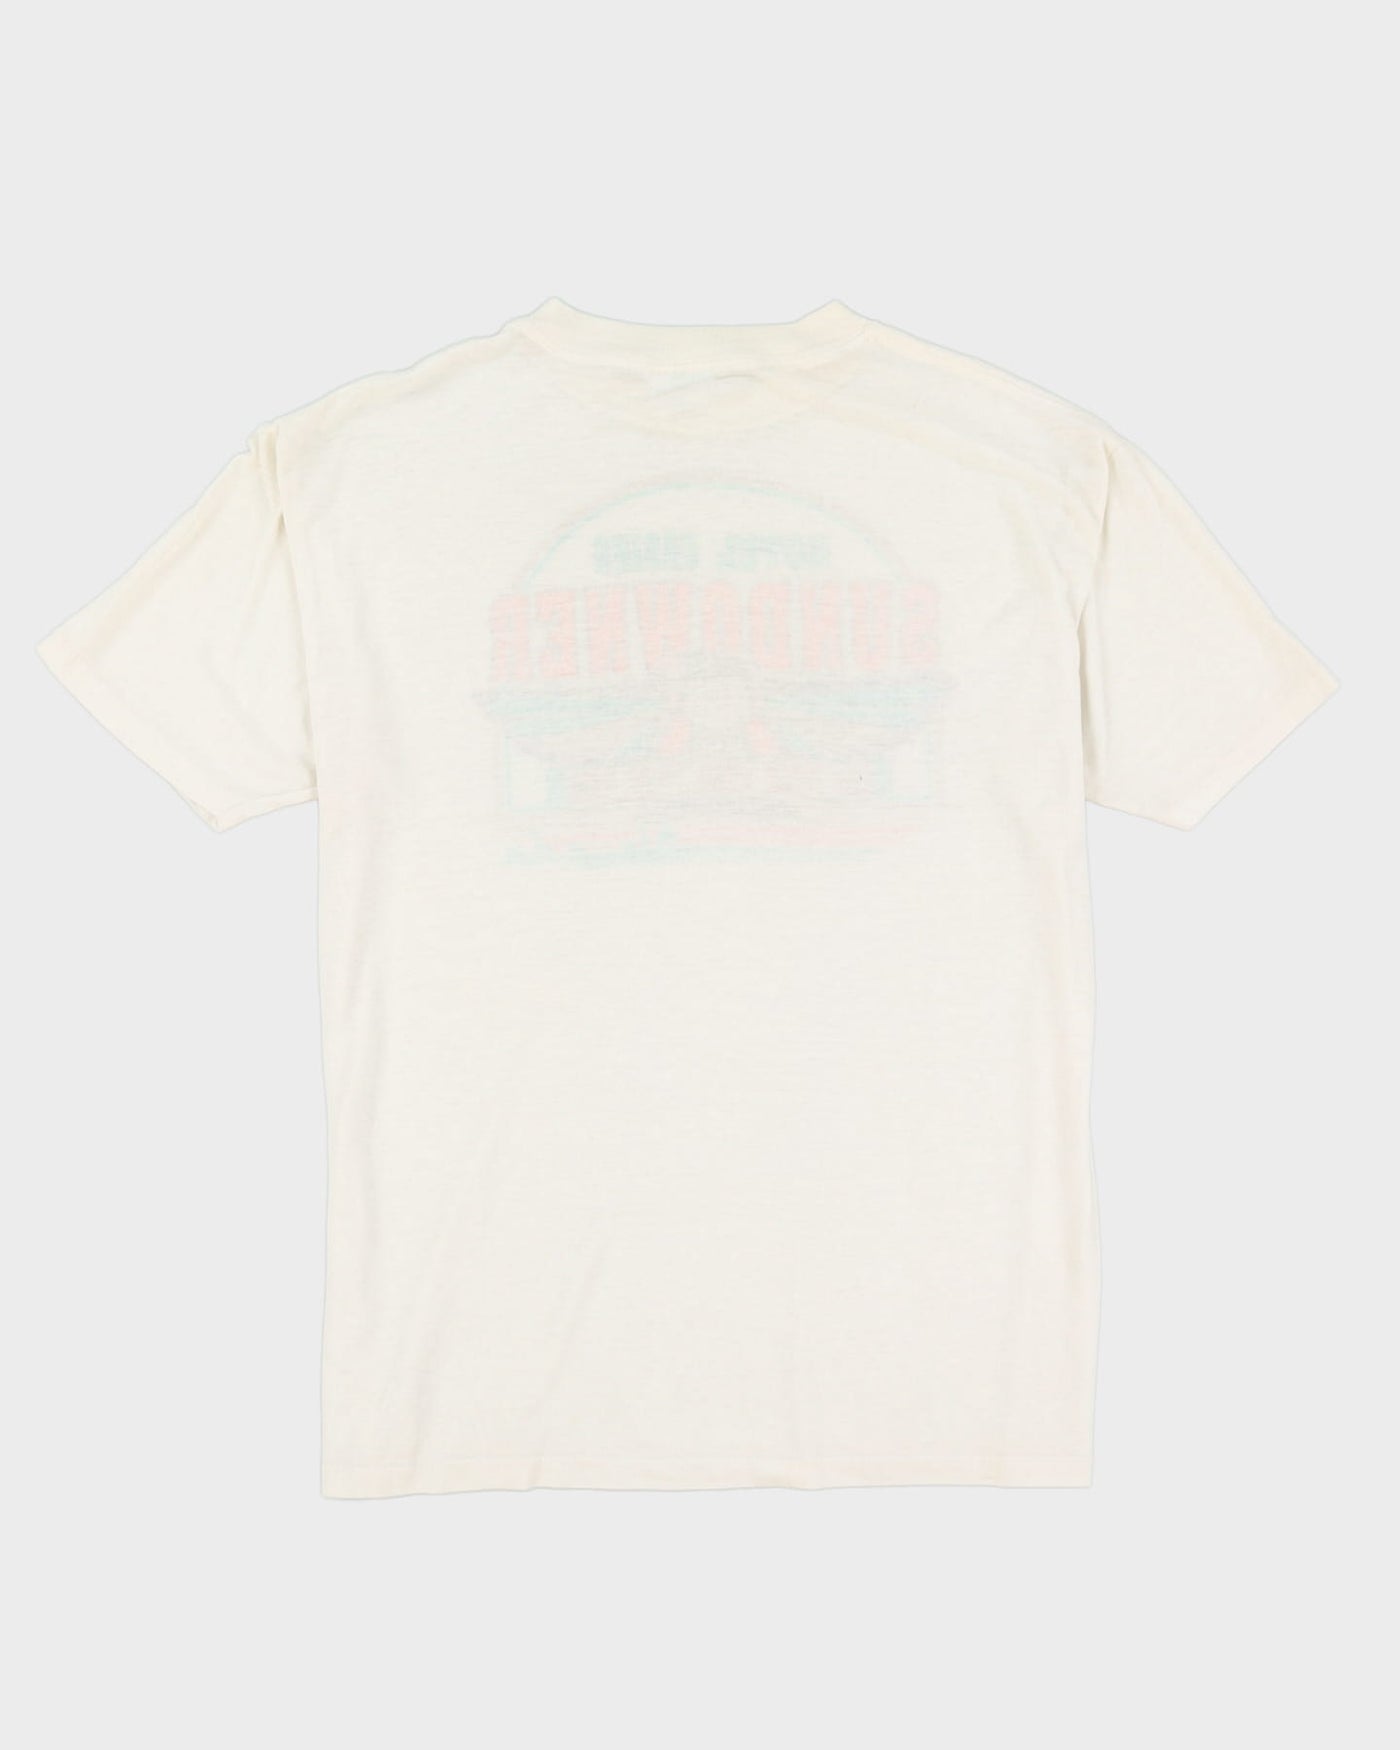 Vintage 80s Hotel Casino Sundowner Nevada White Single Stitch T-Shirt - XL